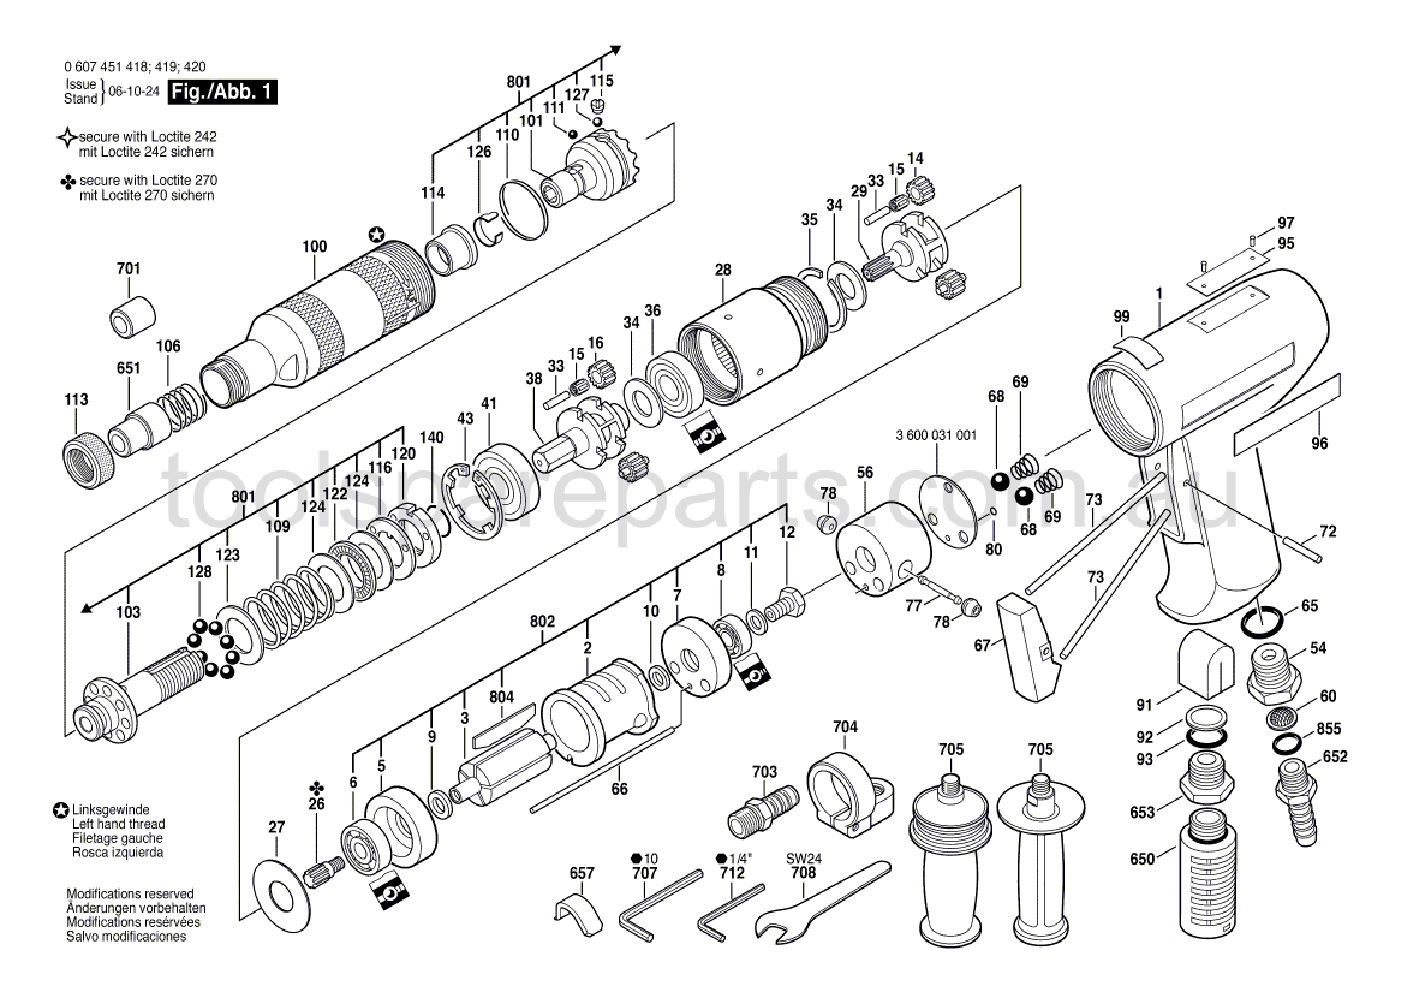 Bosch 370 WATT-SERIE 0607451420  Diagram 1